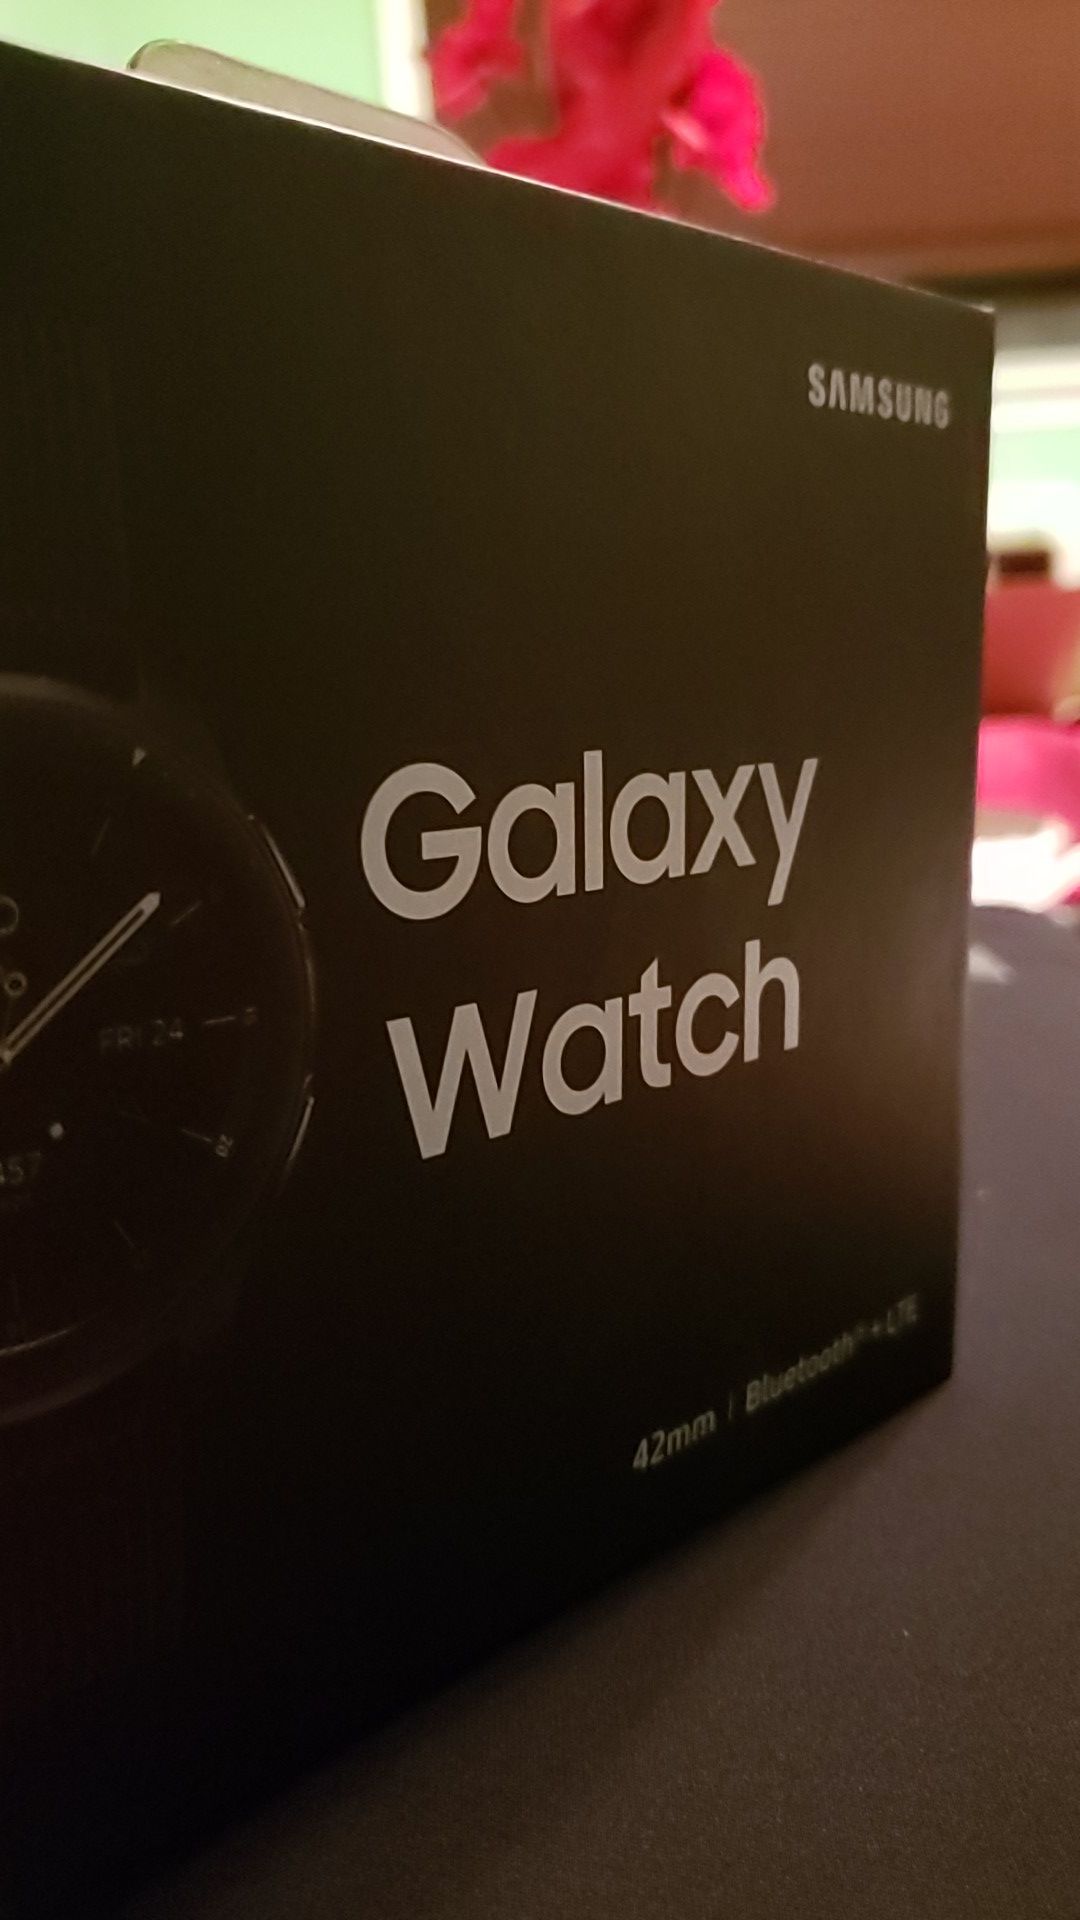 Samsung Galaxy Watch 42mm BRAND NEW IN BOX